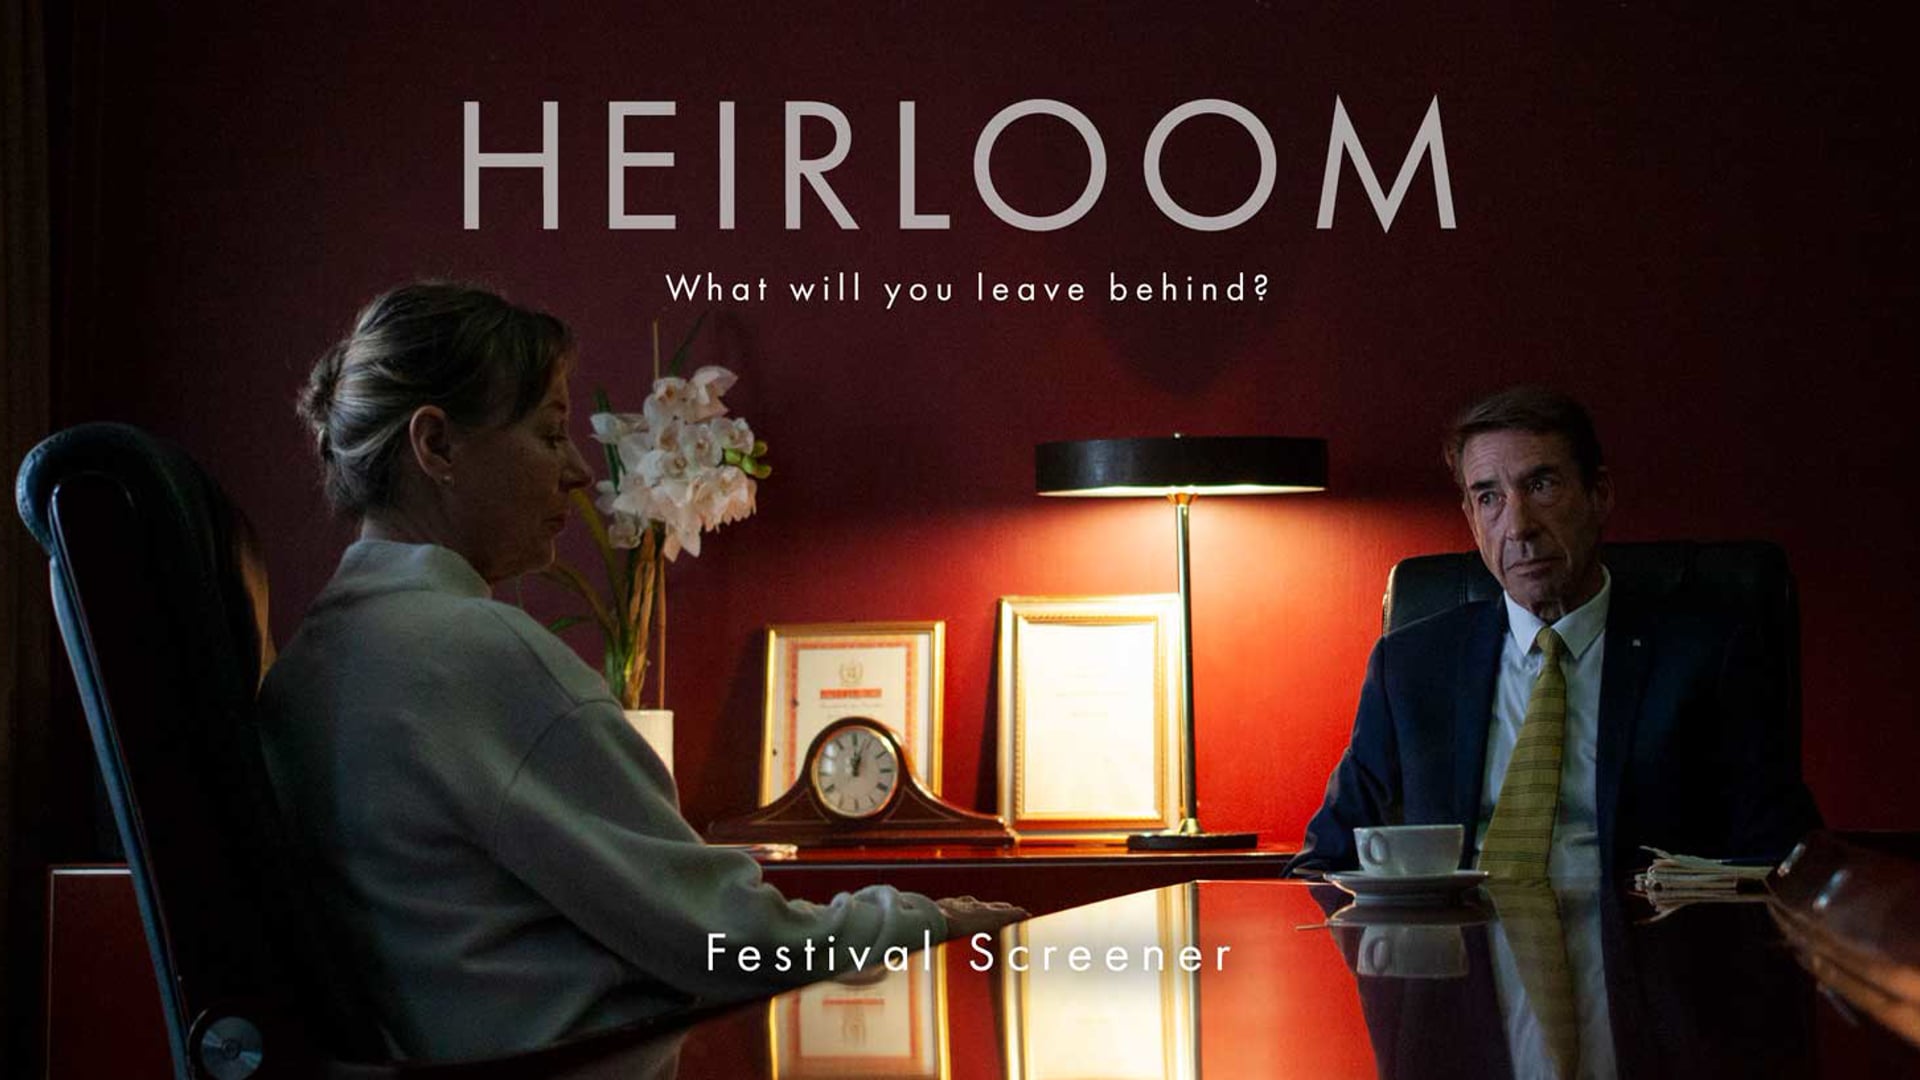 Heirloom Festival Screener